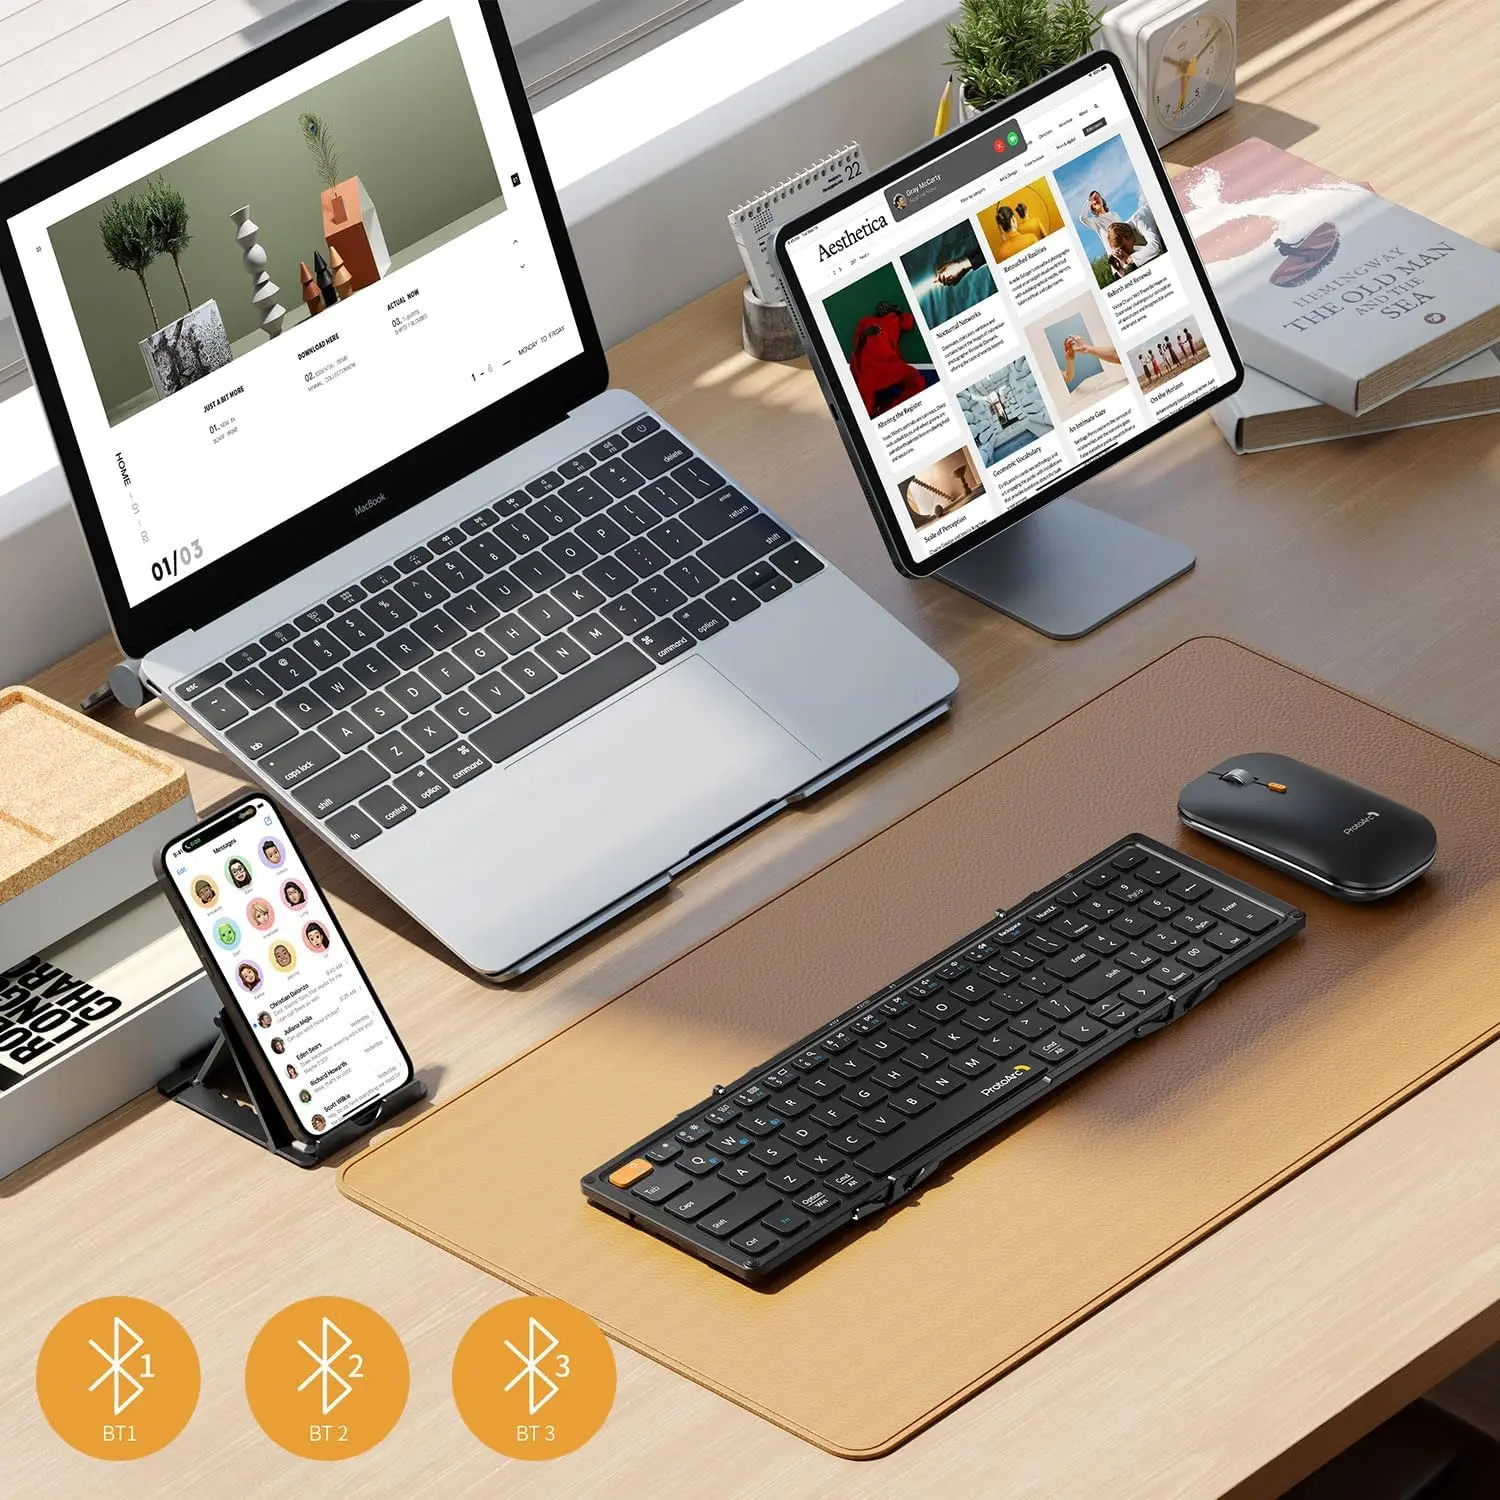 ProtoArc XKM01 Folding Keyboard Mouse Set Portable Bluetooth Wireless Keyboards Mice for iPad iPhone Mac Android Windows iOS